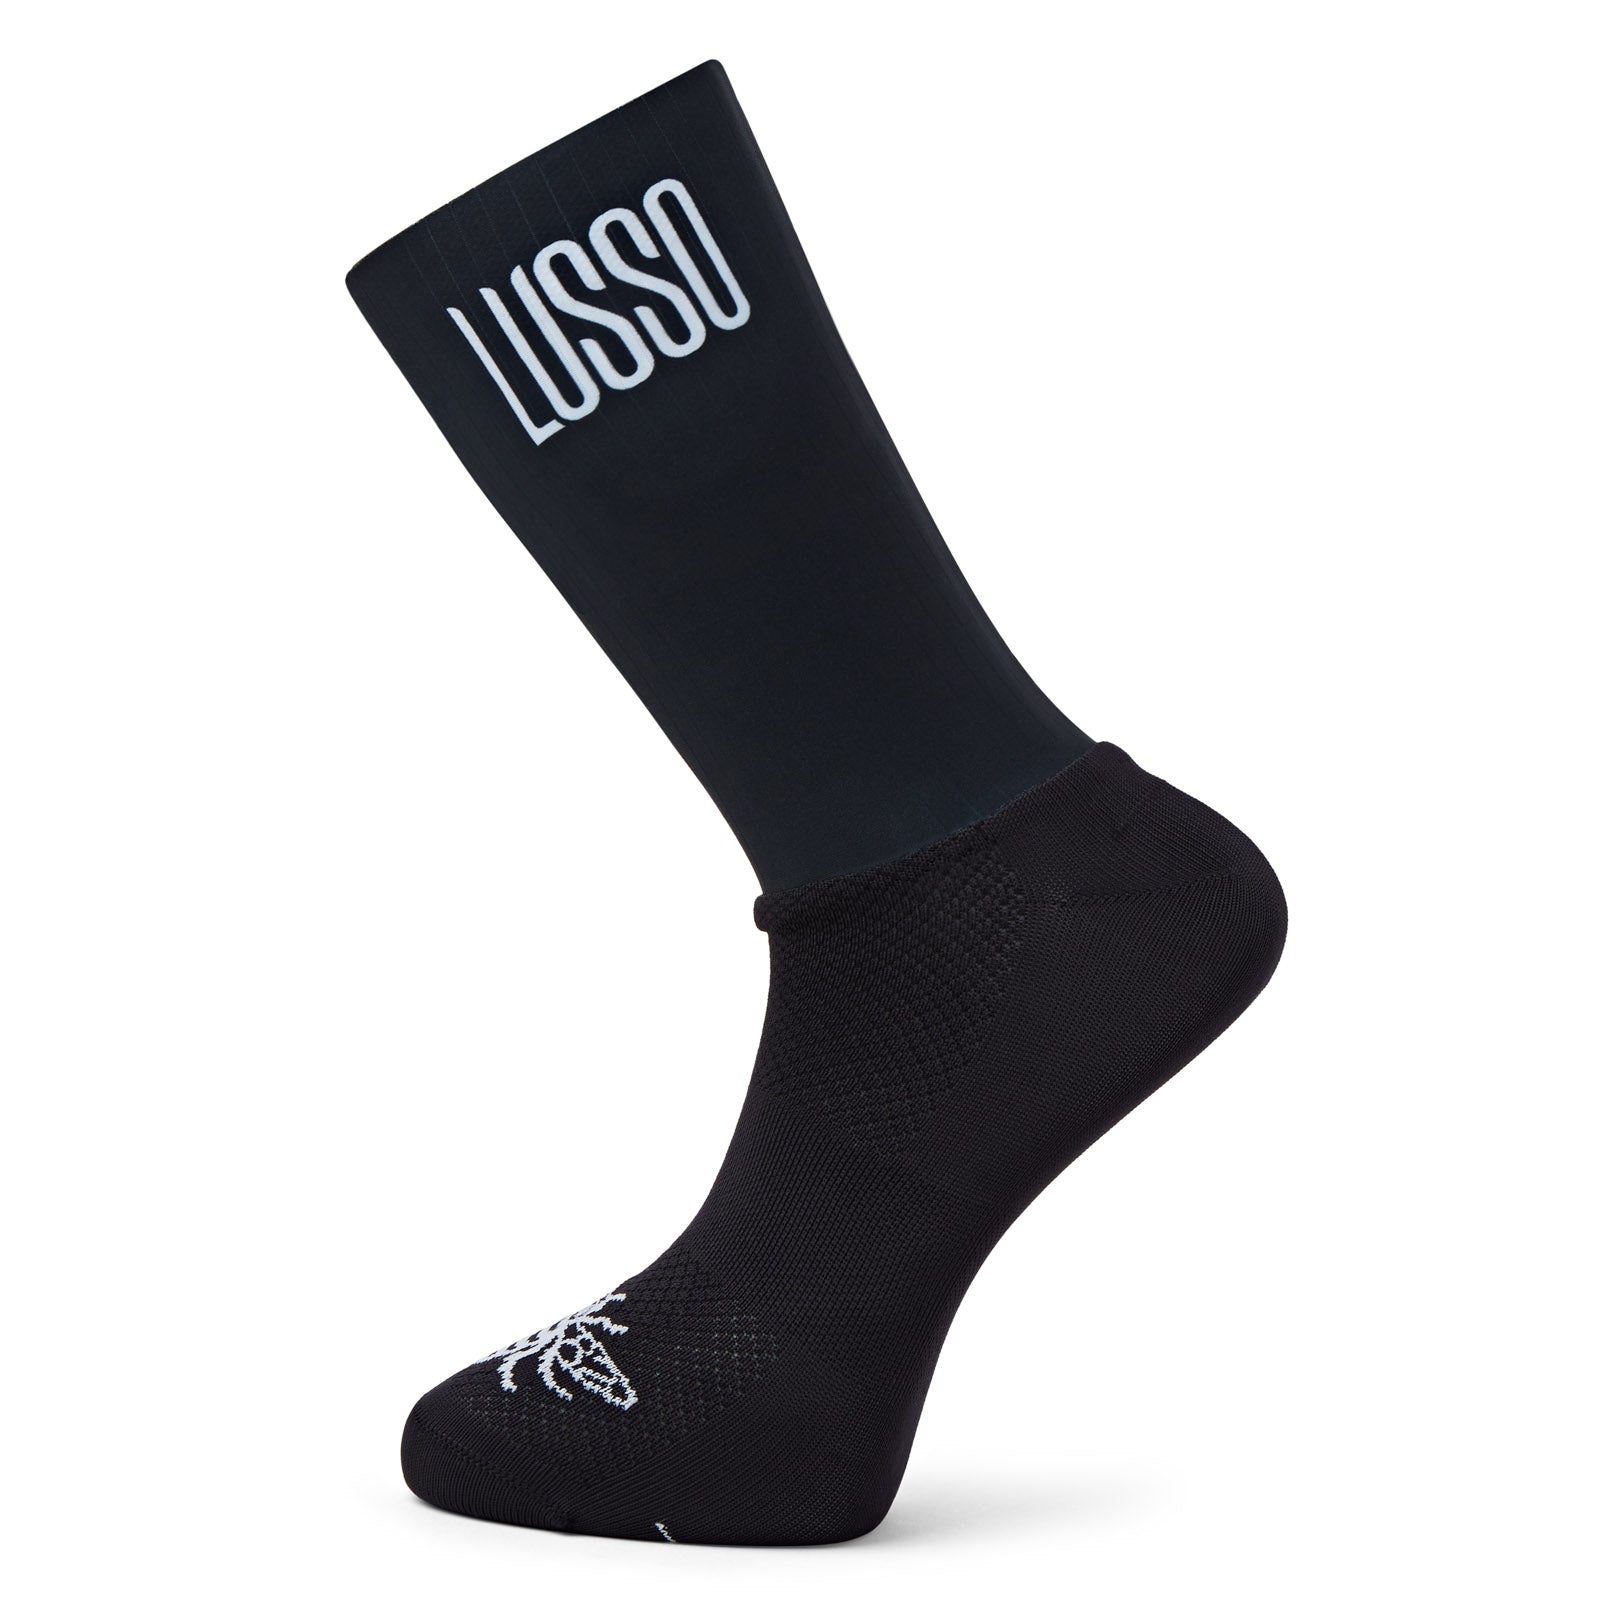 Paragon Aero Socks - Lusso Cycle Wear